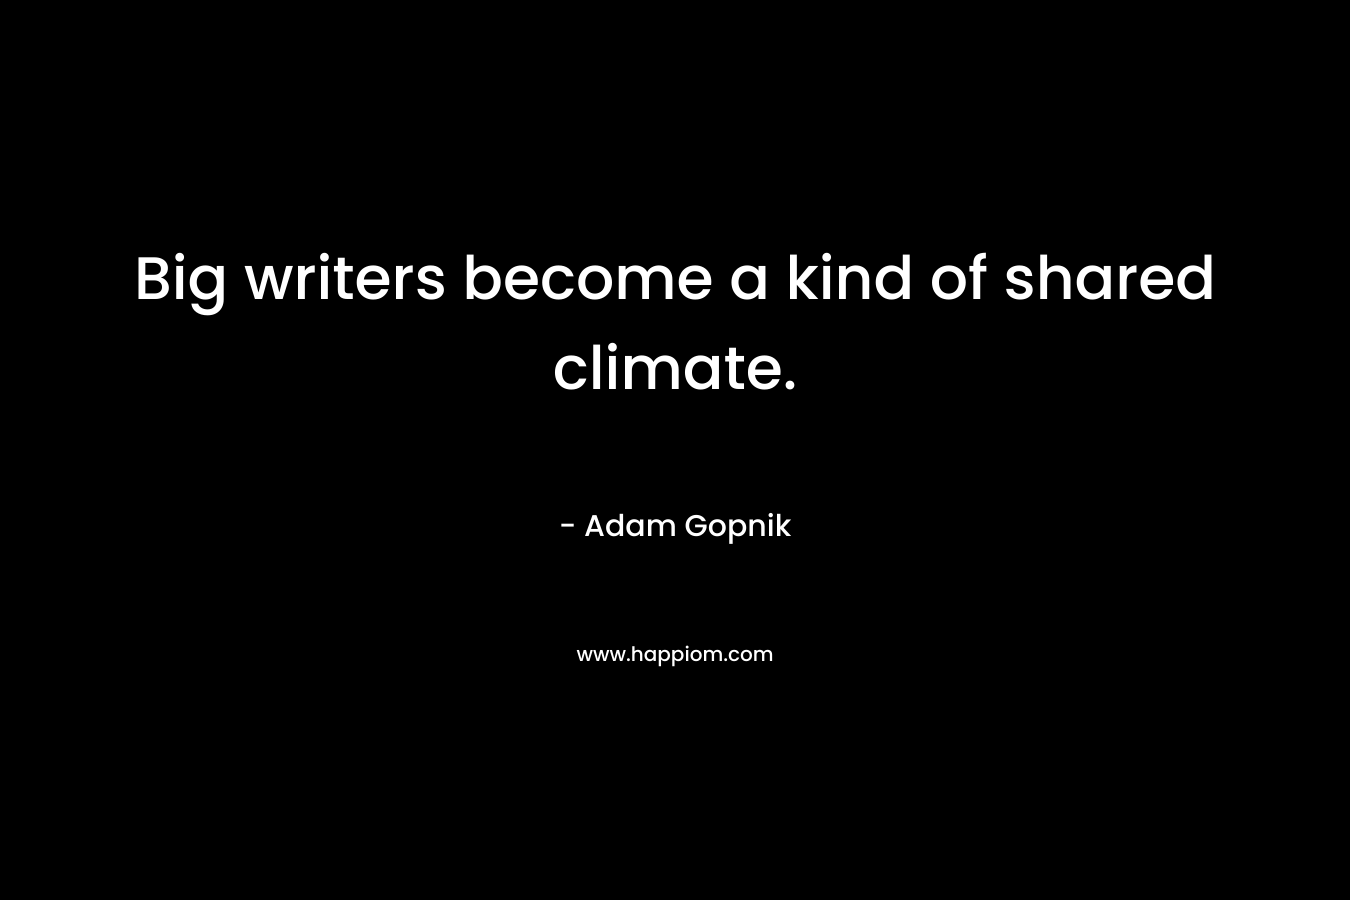 Big writers become a kind of shared climate.